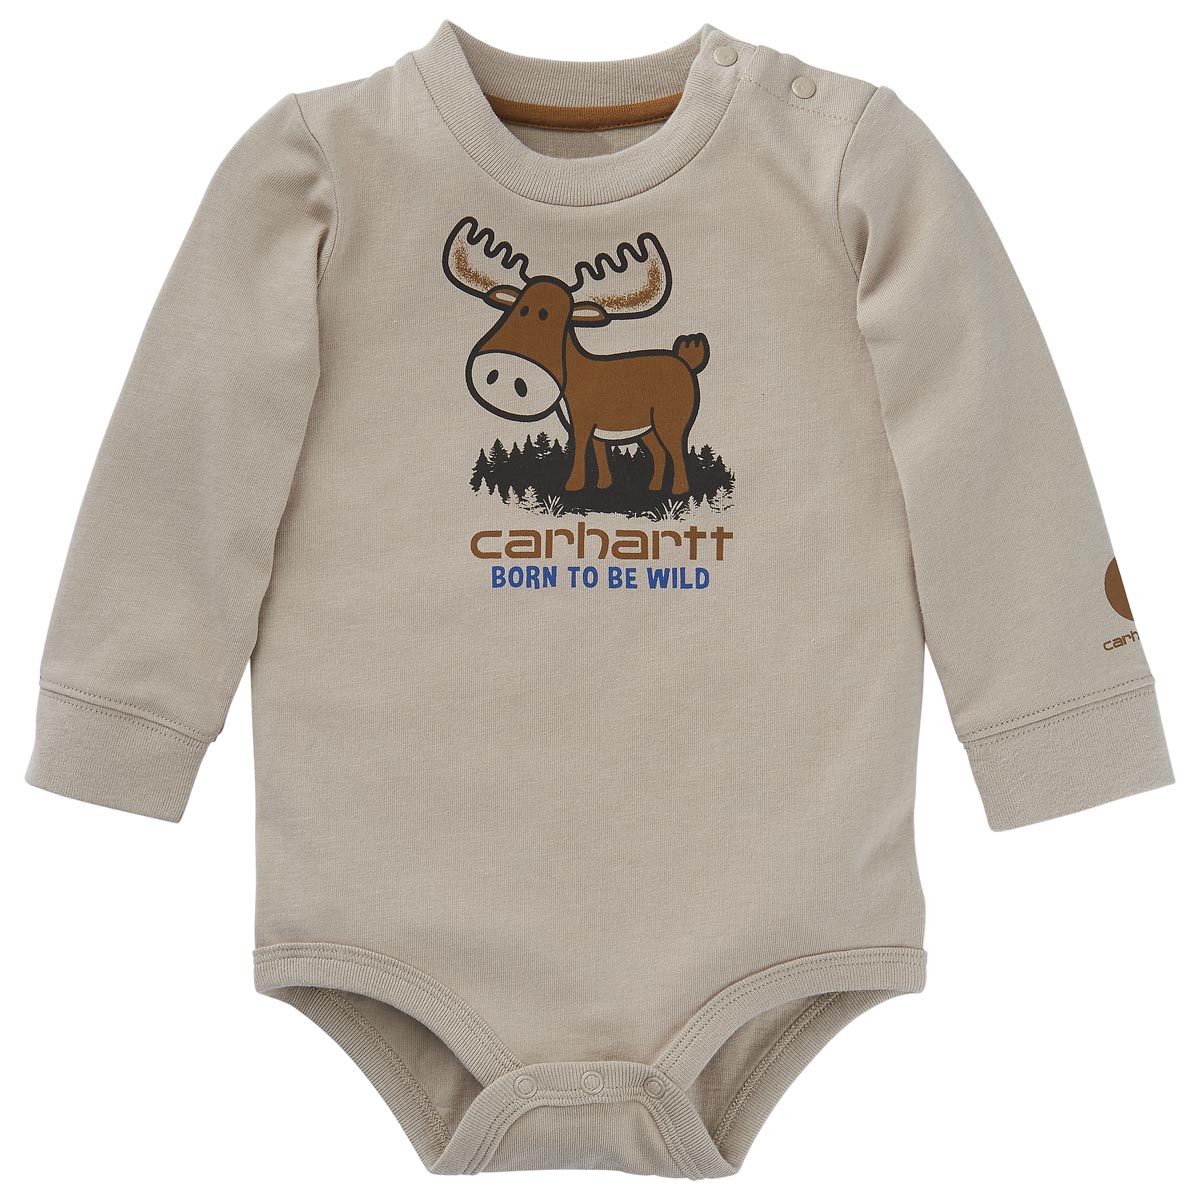 Carhartt Infant Boys' Born Wild Bodyshirt